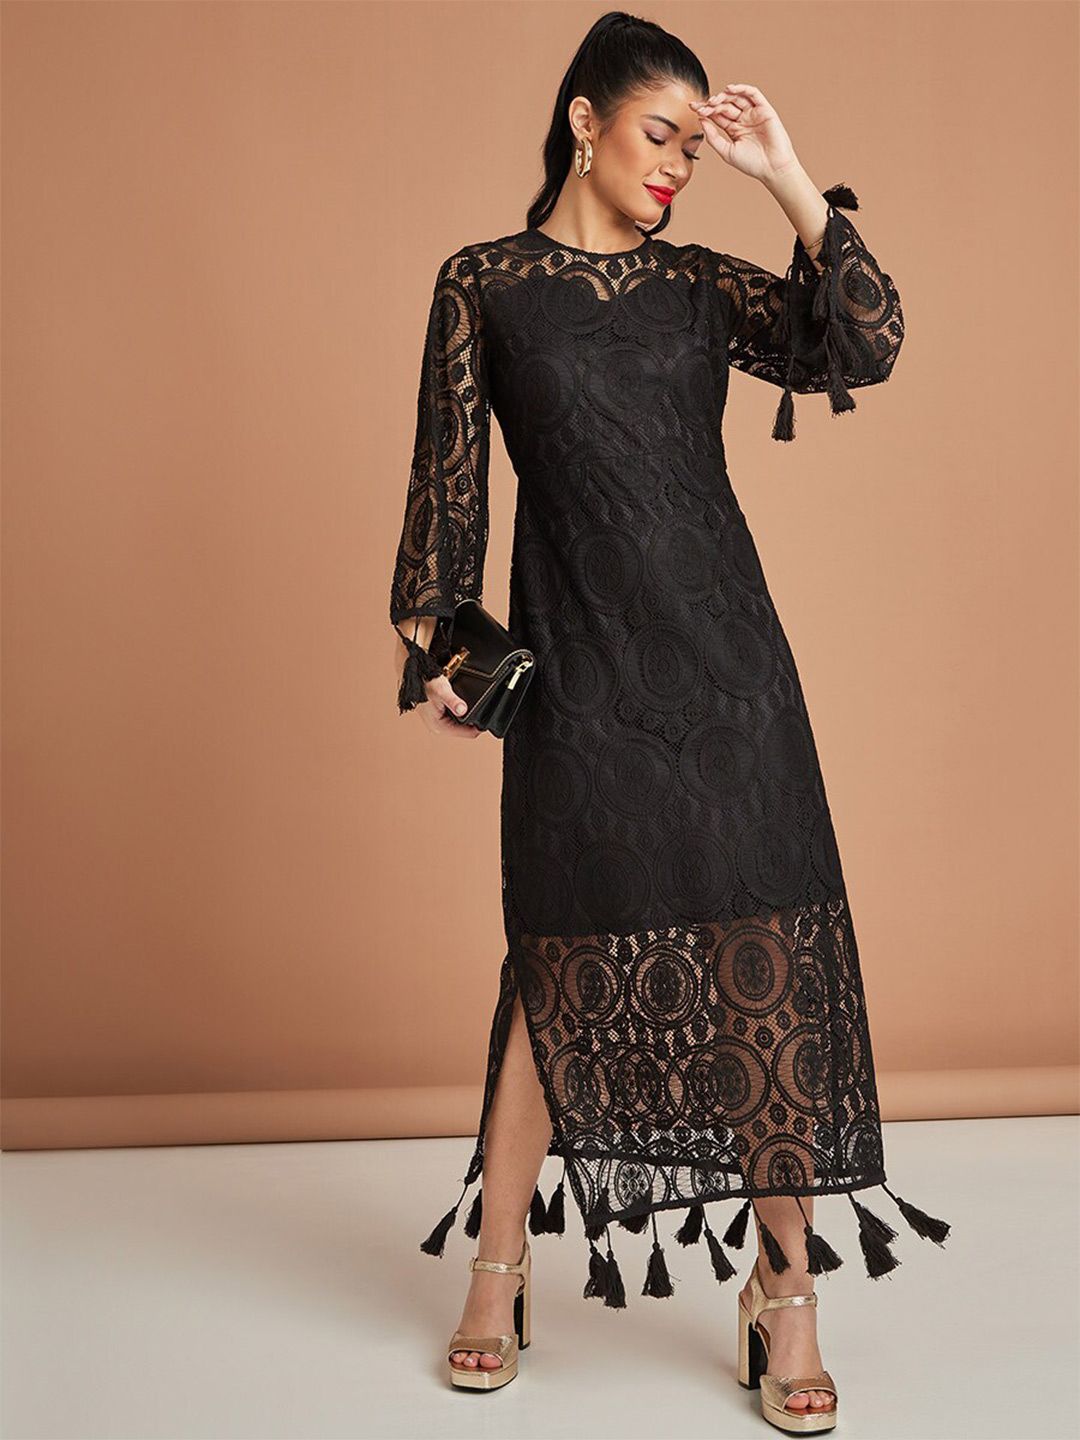 Styli Black Maxi Dress Price in India